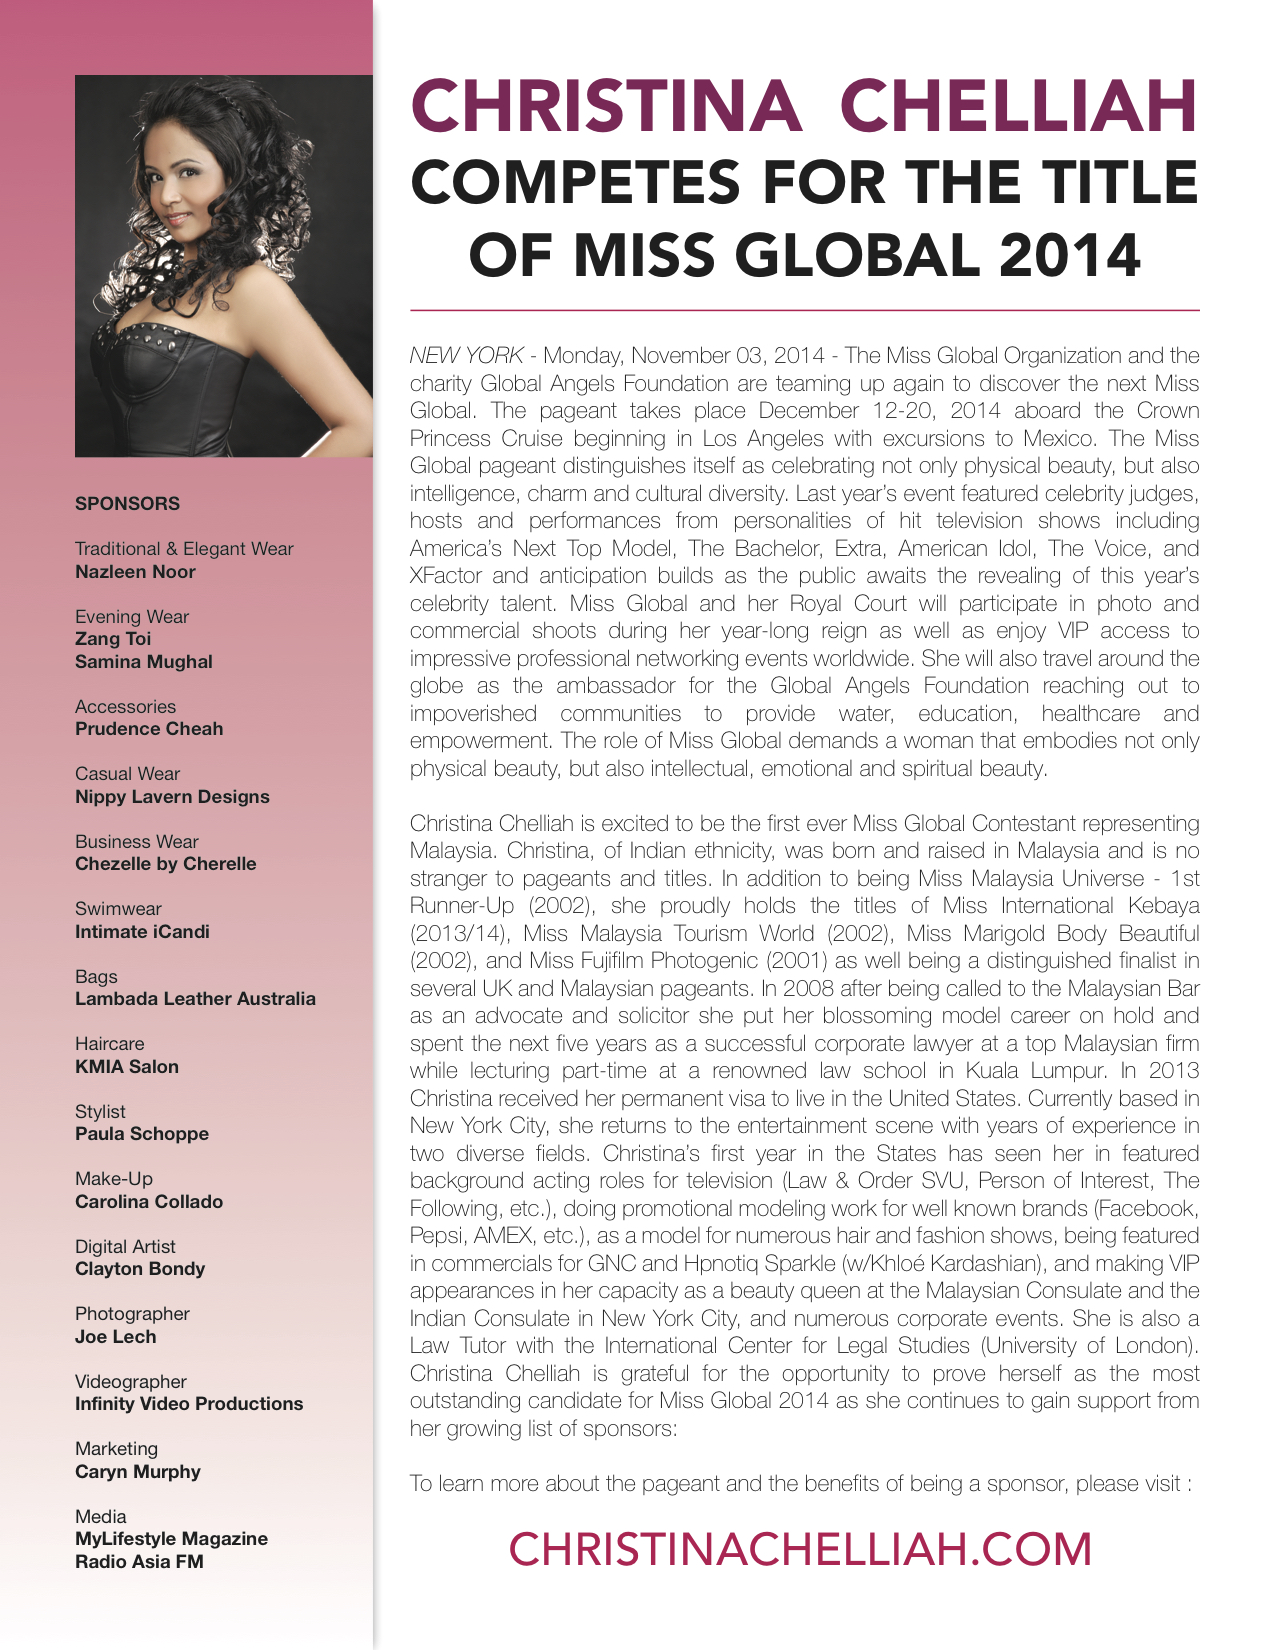 Press Release - Miss Global 2014 Malaysian Candidate Christina Chelliah.jpg